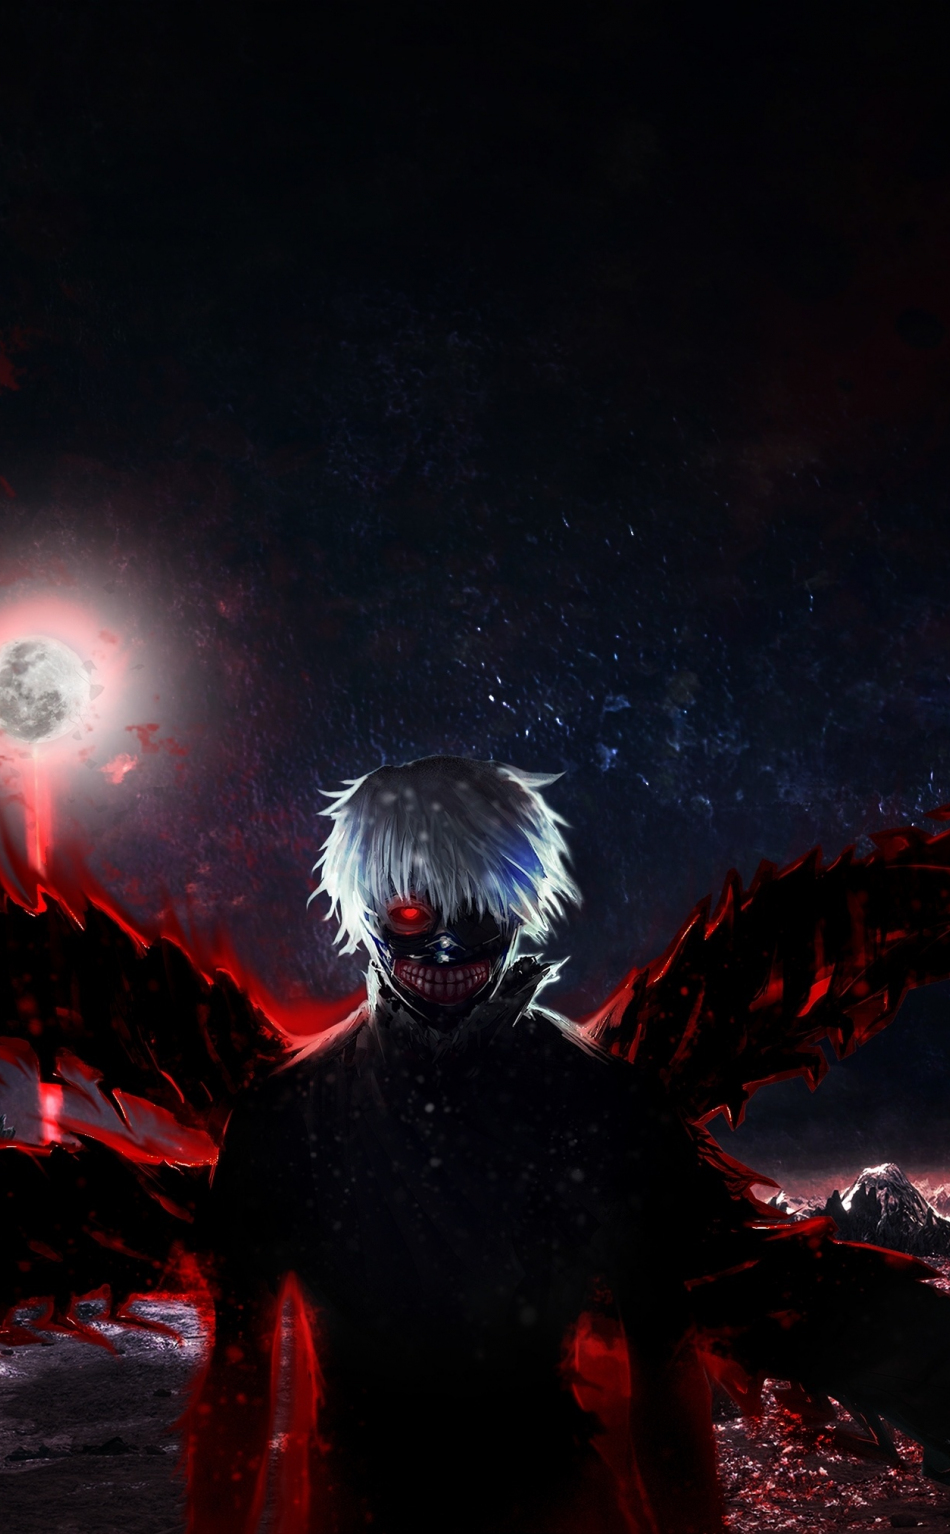 Download wallpaper x tokyo ghoul dark anime boy artwork iphone x hd background